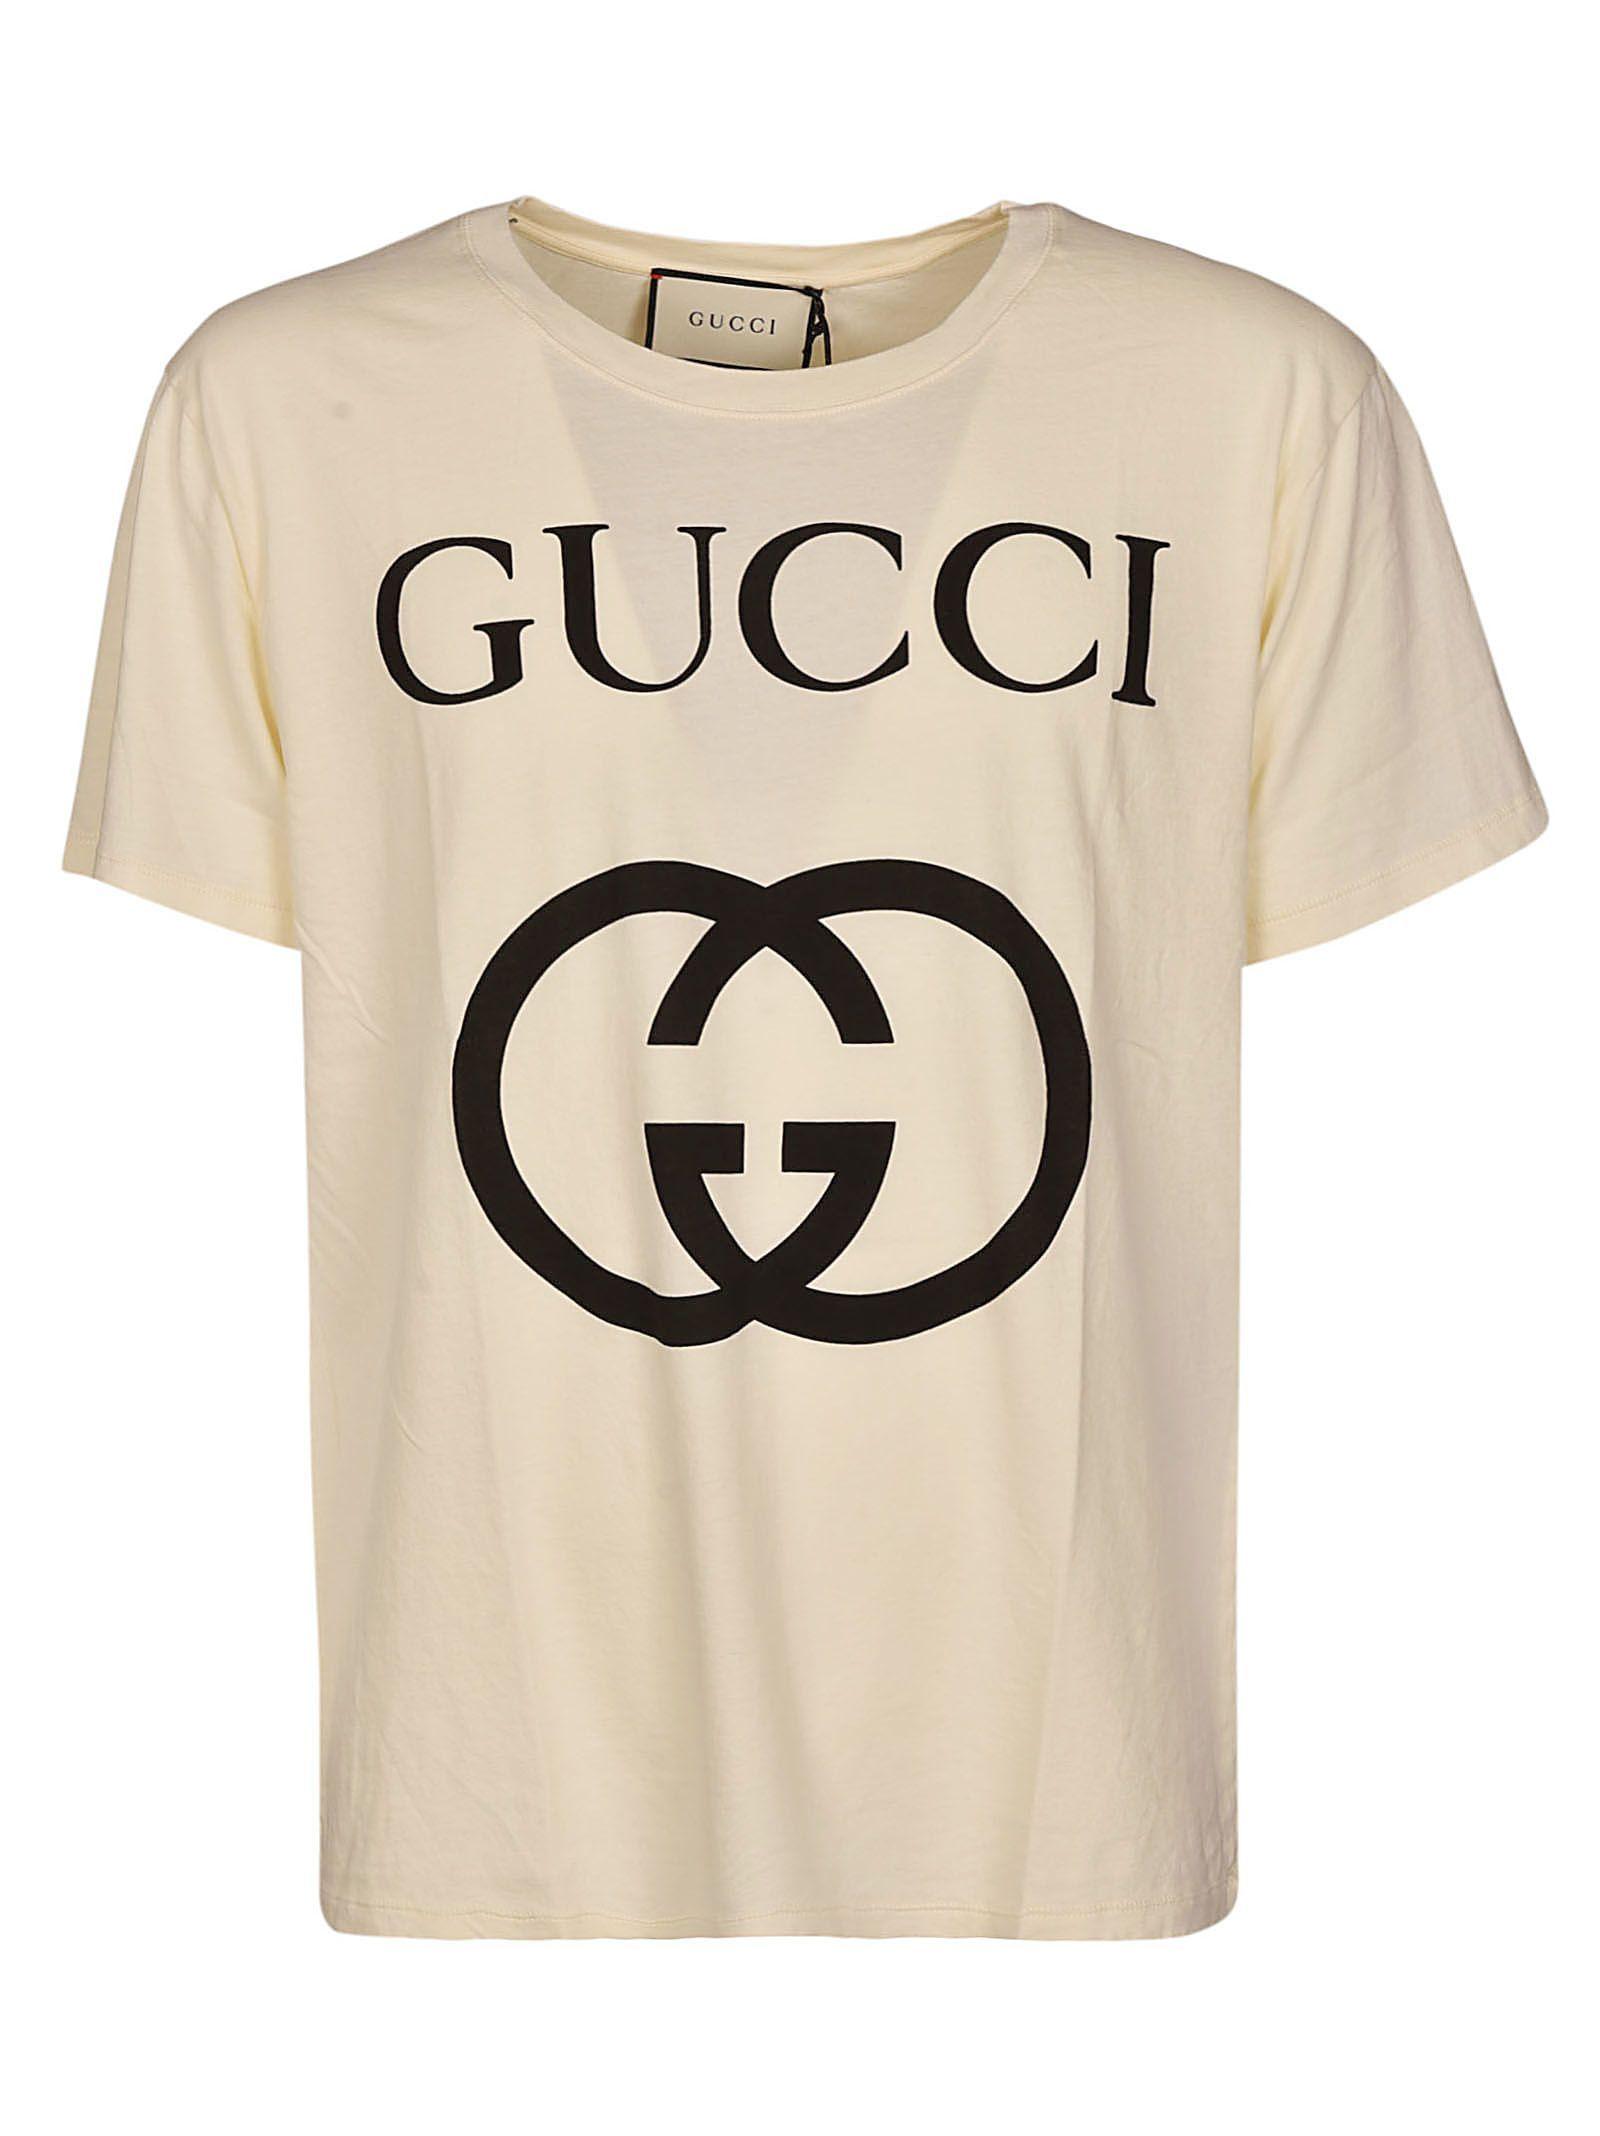 Gucci Clothing Logo - GUCCI LOGO T-SHIRT. #gucci #cloth | Styles | Pinterest | Gucci ...